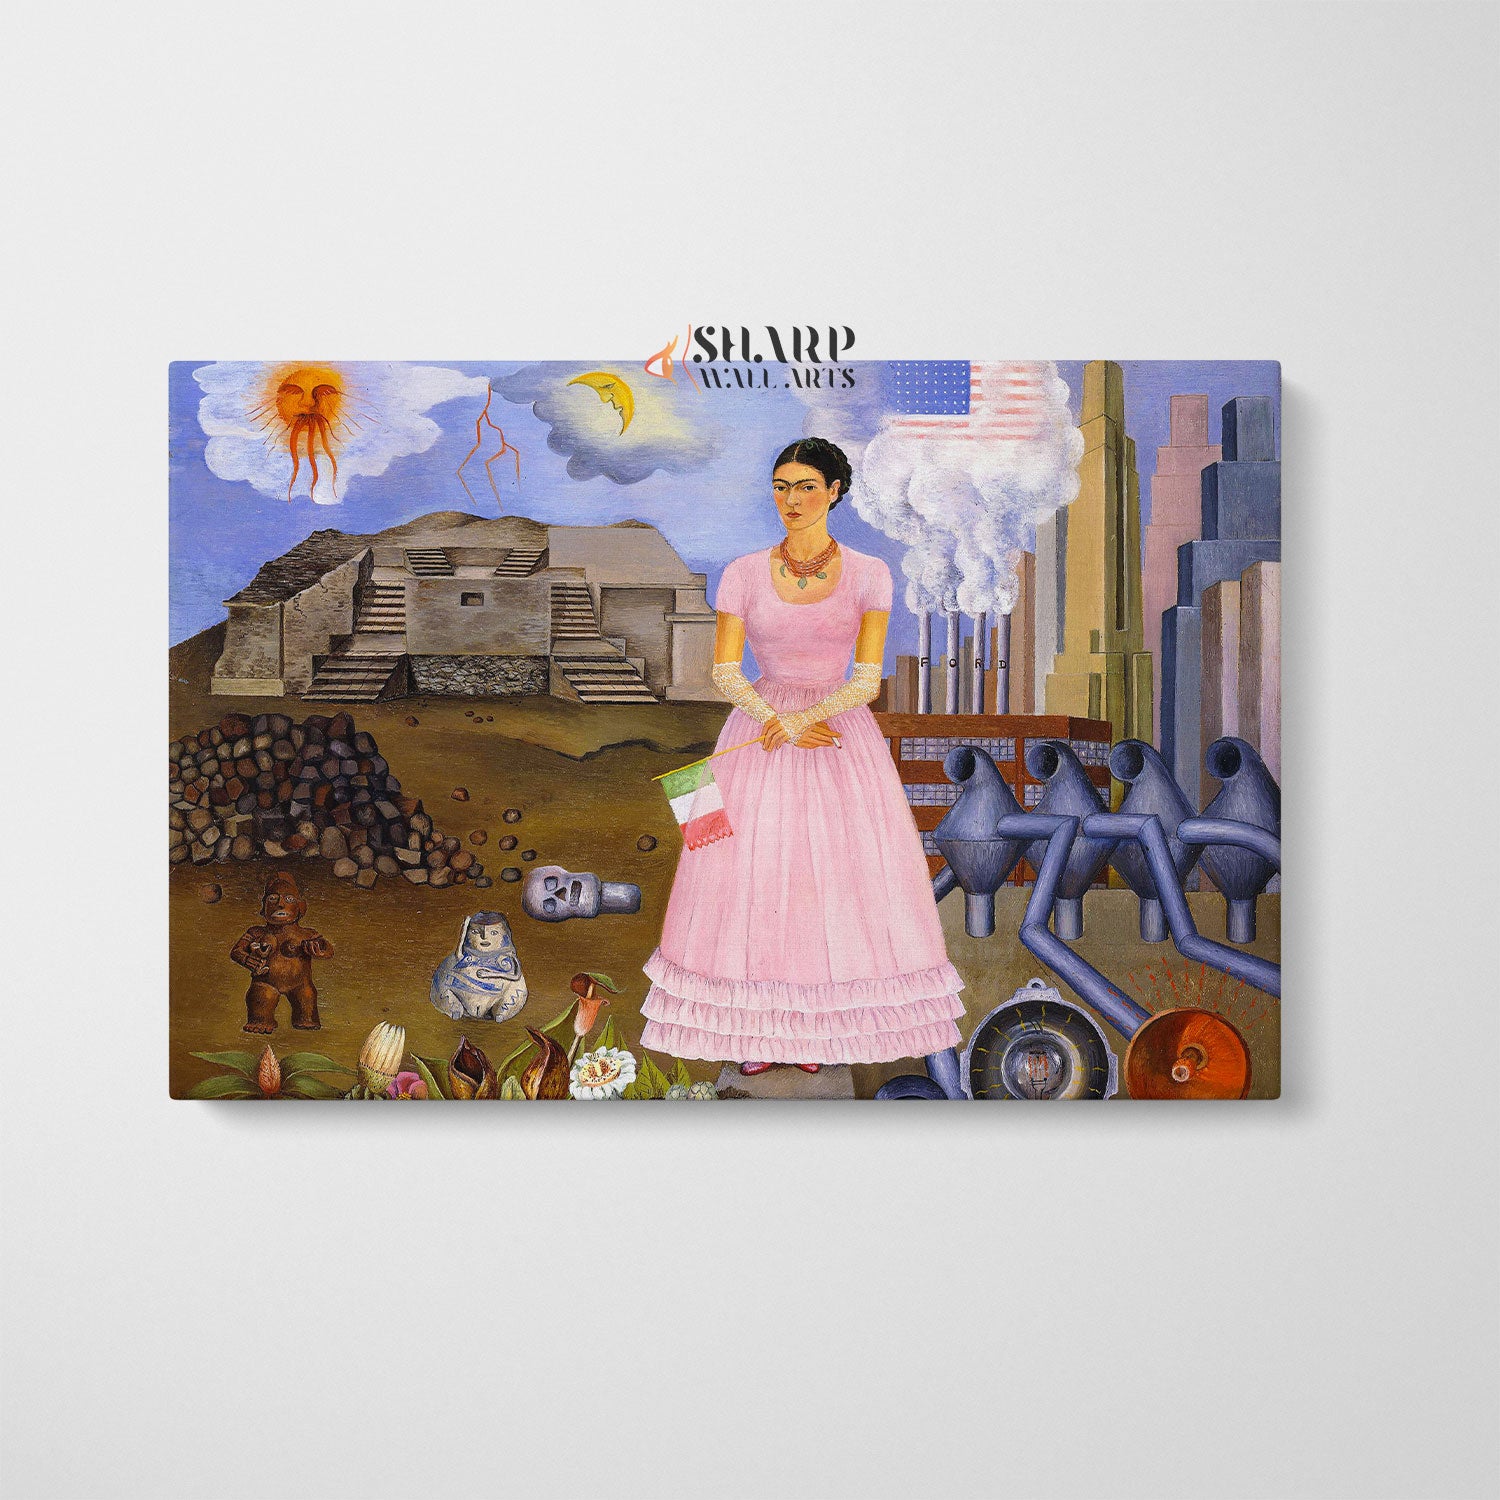 Frida Kahlo Self-Portrait On The Border Canvas Wall Art